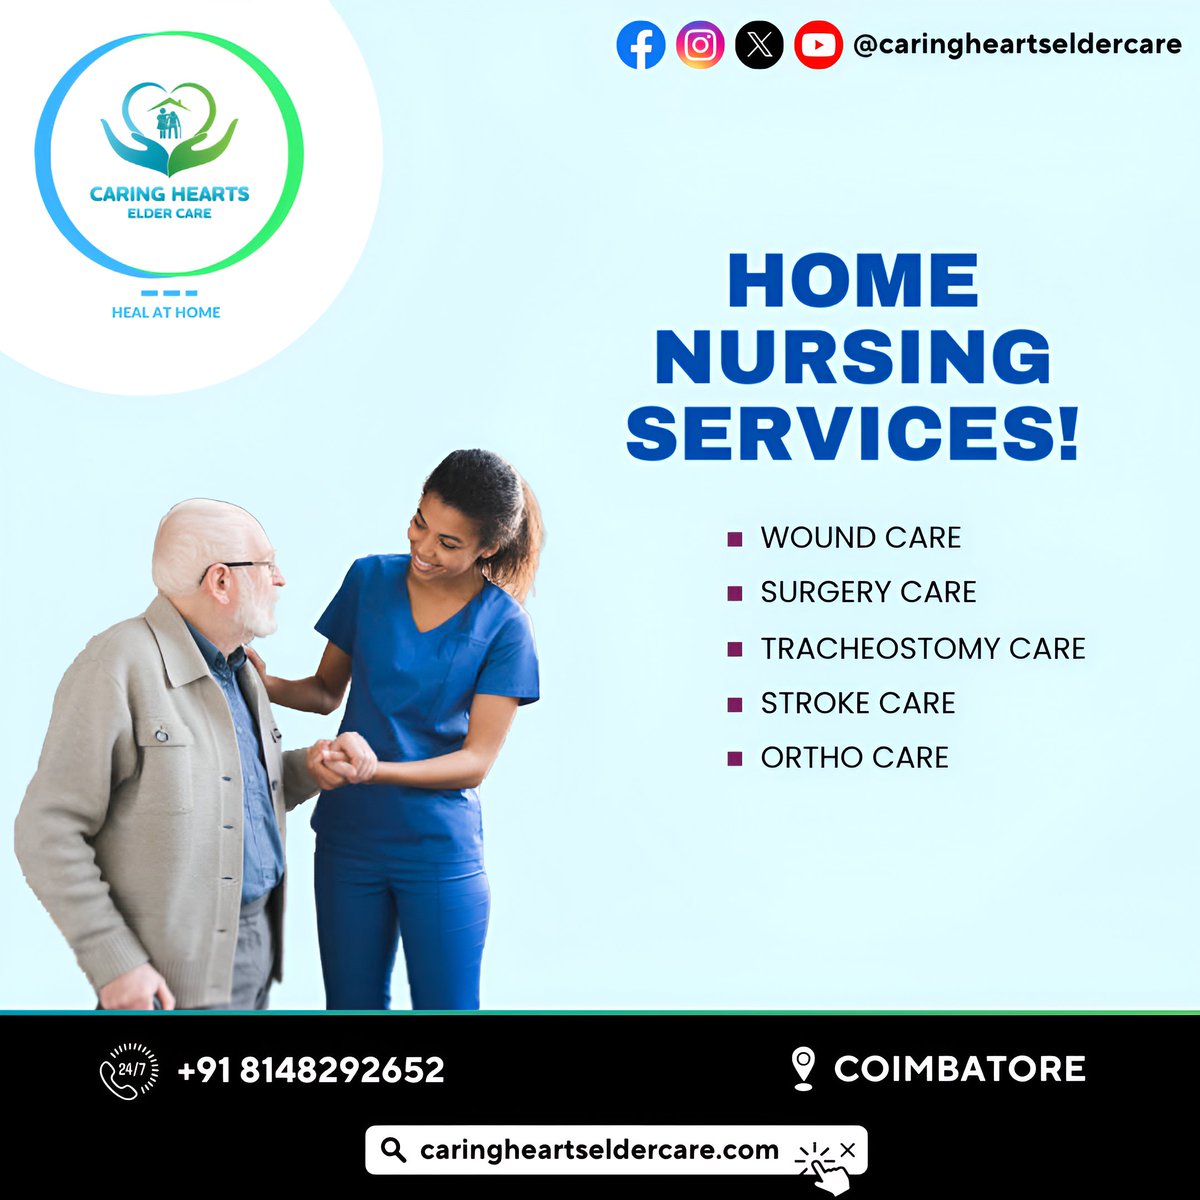 Why Choose @caringheartsEC 

#caringheartseldercare #homecare #eldercare #Chennai #Coimbatore #tuesday #Hyderabad #Mumbai #Kerala #bangalore #uk #usa #tweet #careathome #best #homecareagency #rspuram #Hospital #Assistedliving #services #wecare #love #Agency #India #news #care